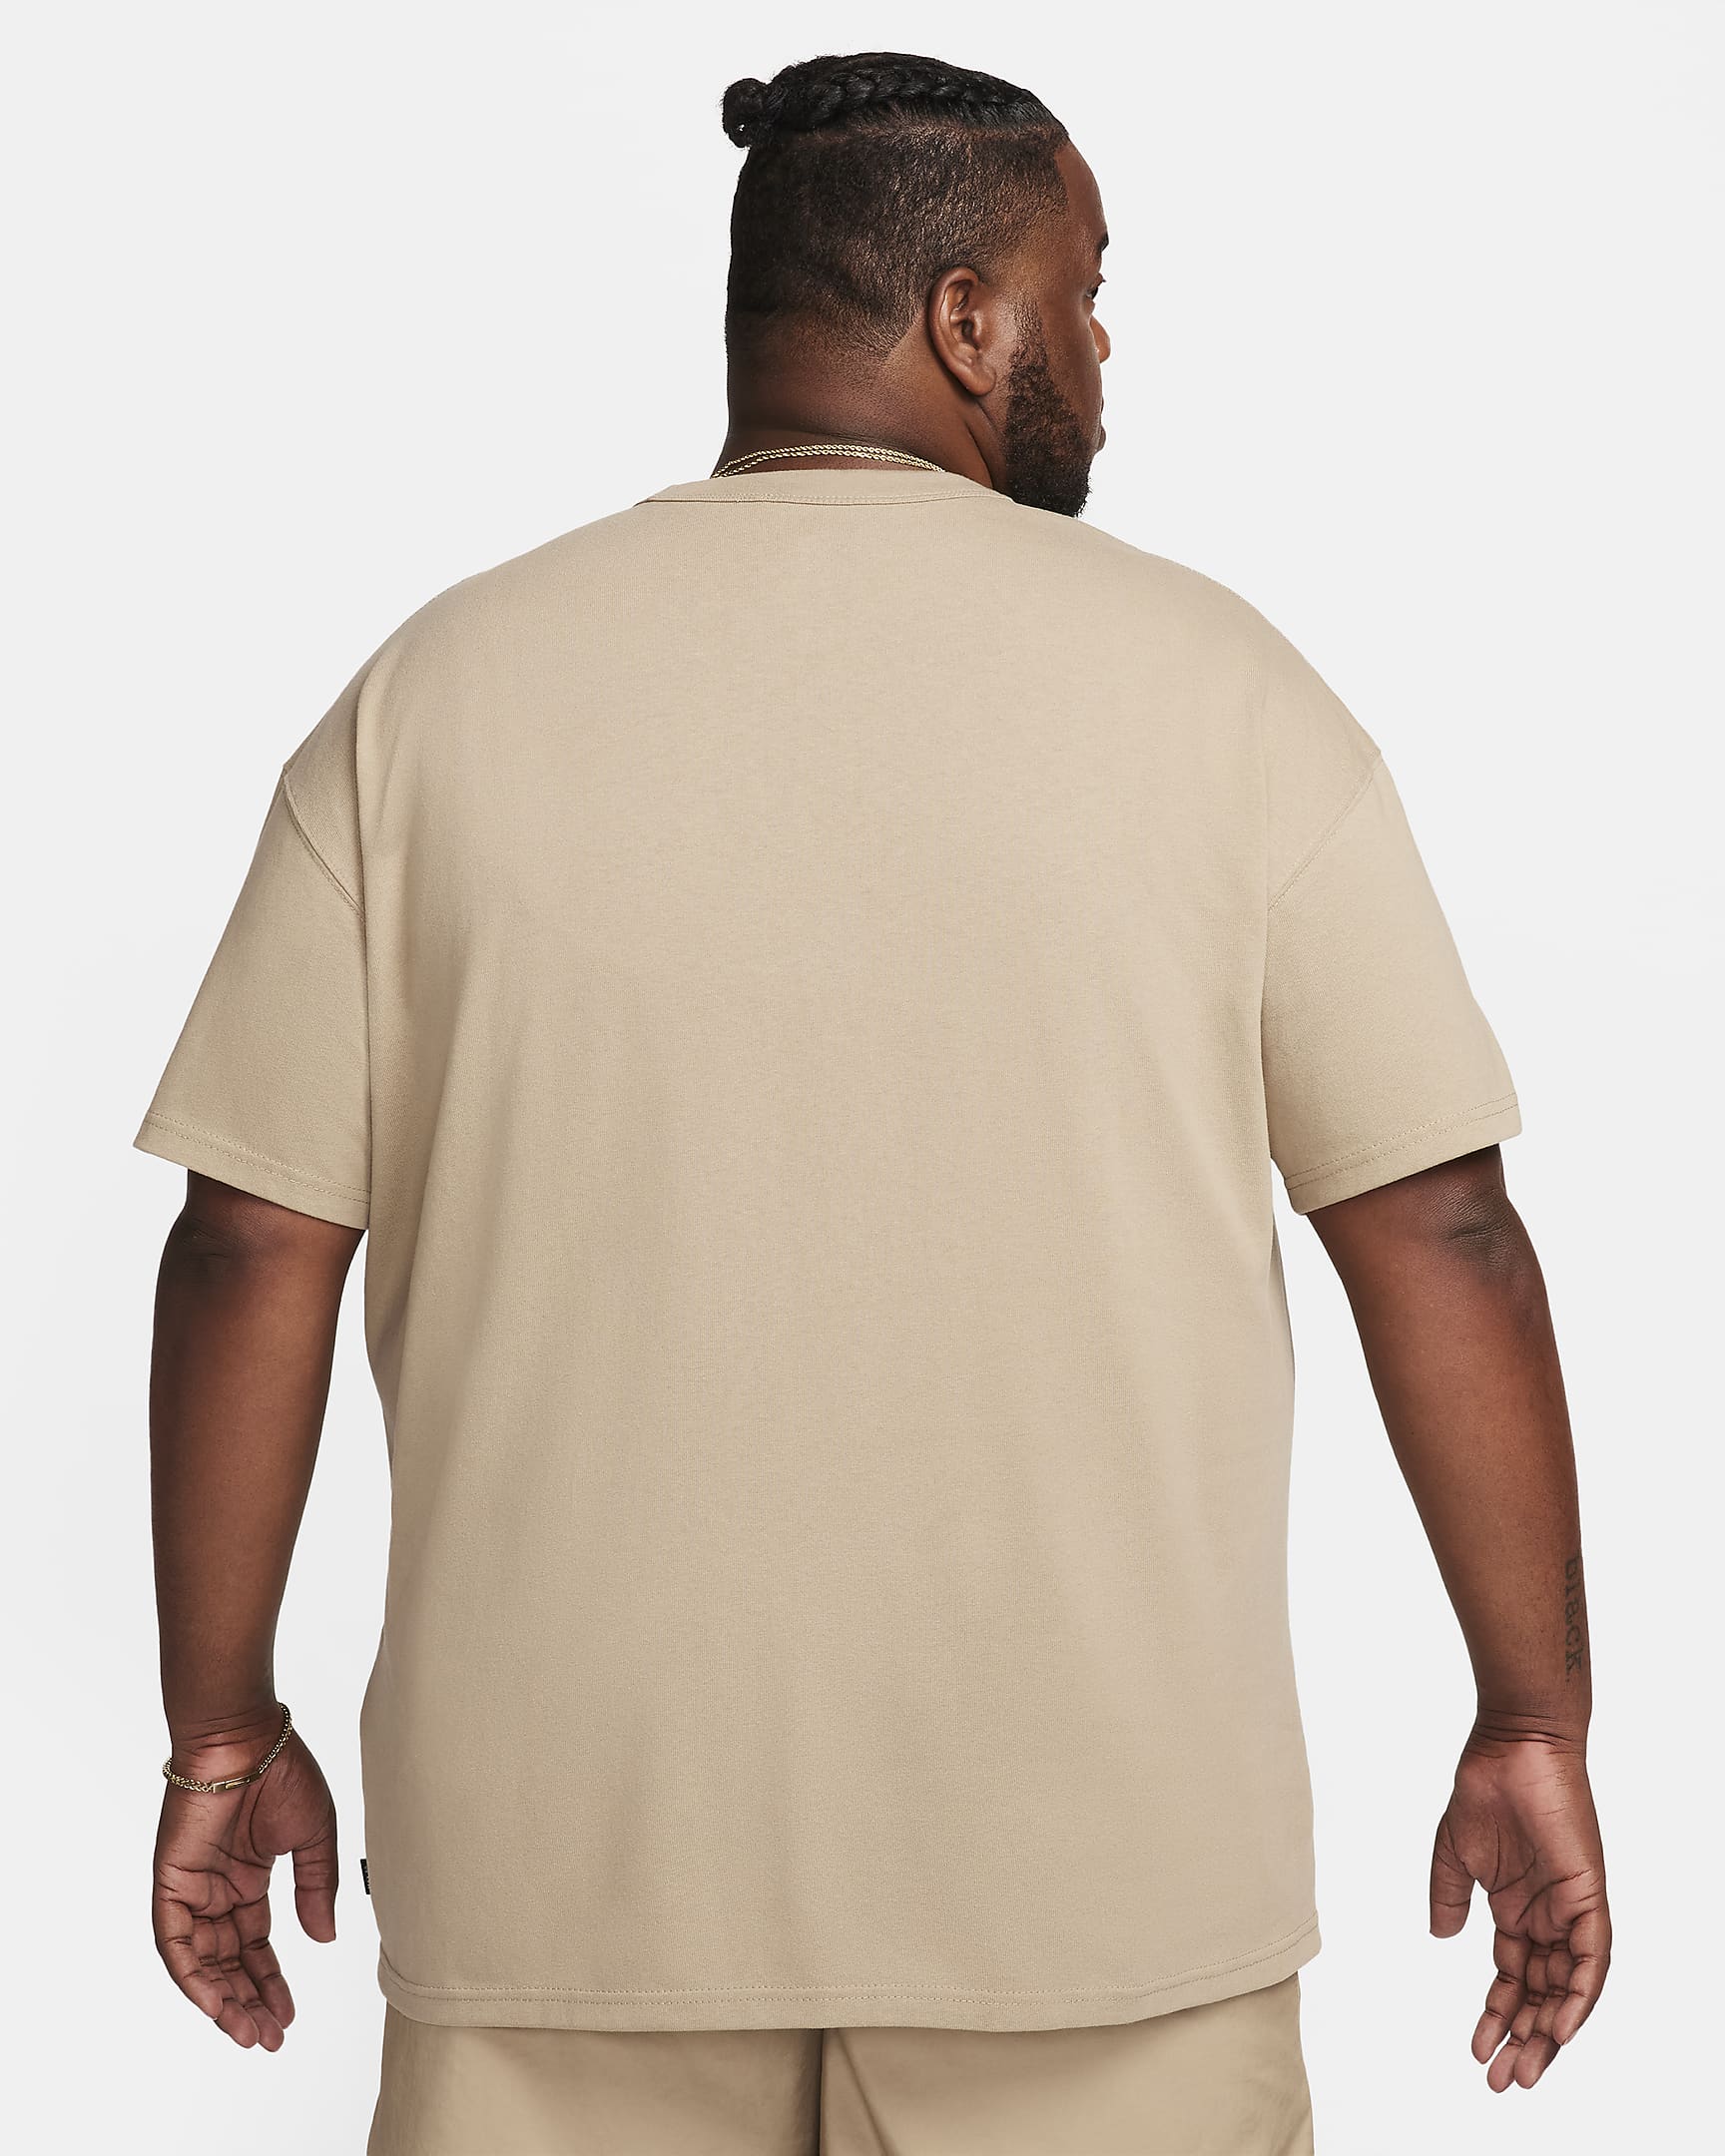 Nike Sportswear Premium Essentials Men's T-Shirt - Khaki